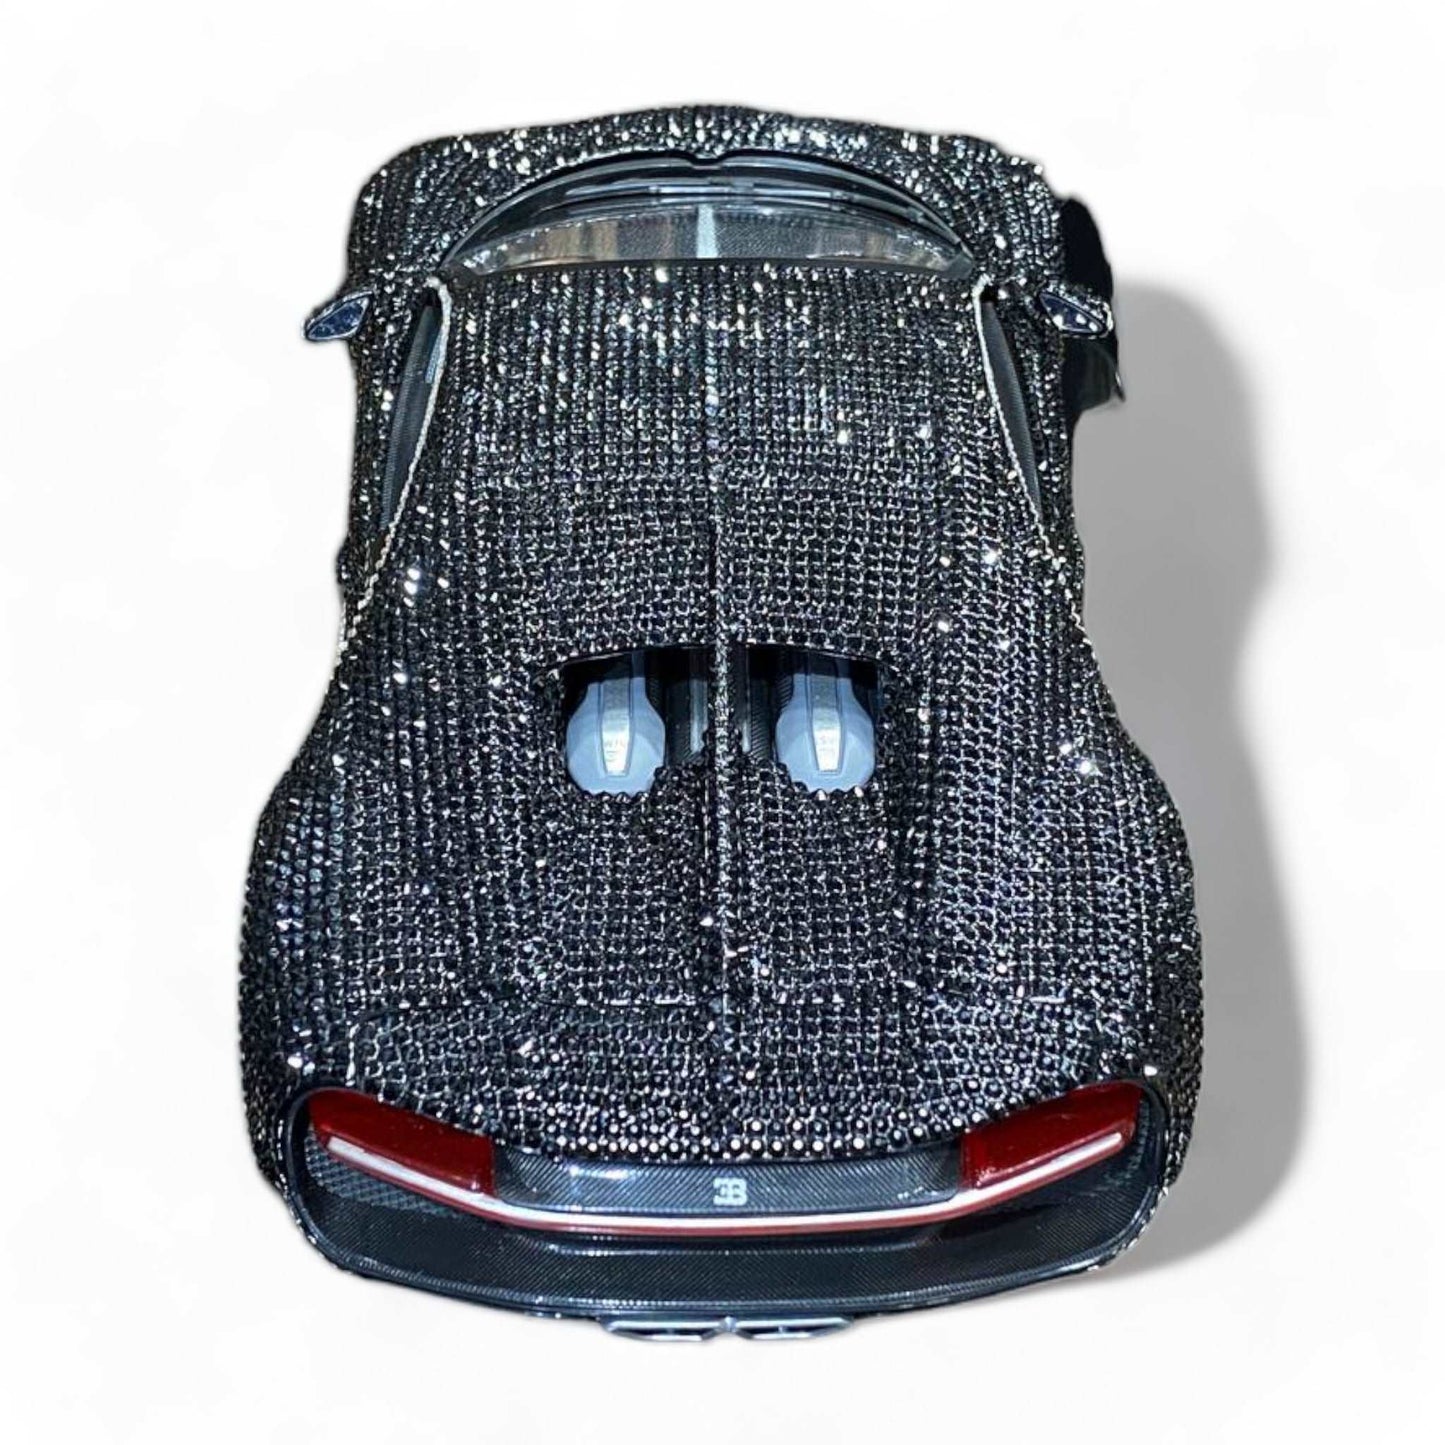 1/18 Diecast Bugatti Chiron Swarovski Crystal color Limited Edition - Bburago Scale Model Car|Sold in Dturman.com Dubai UAE.